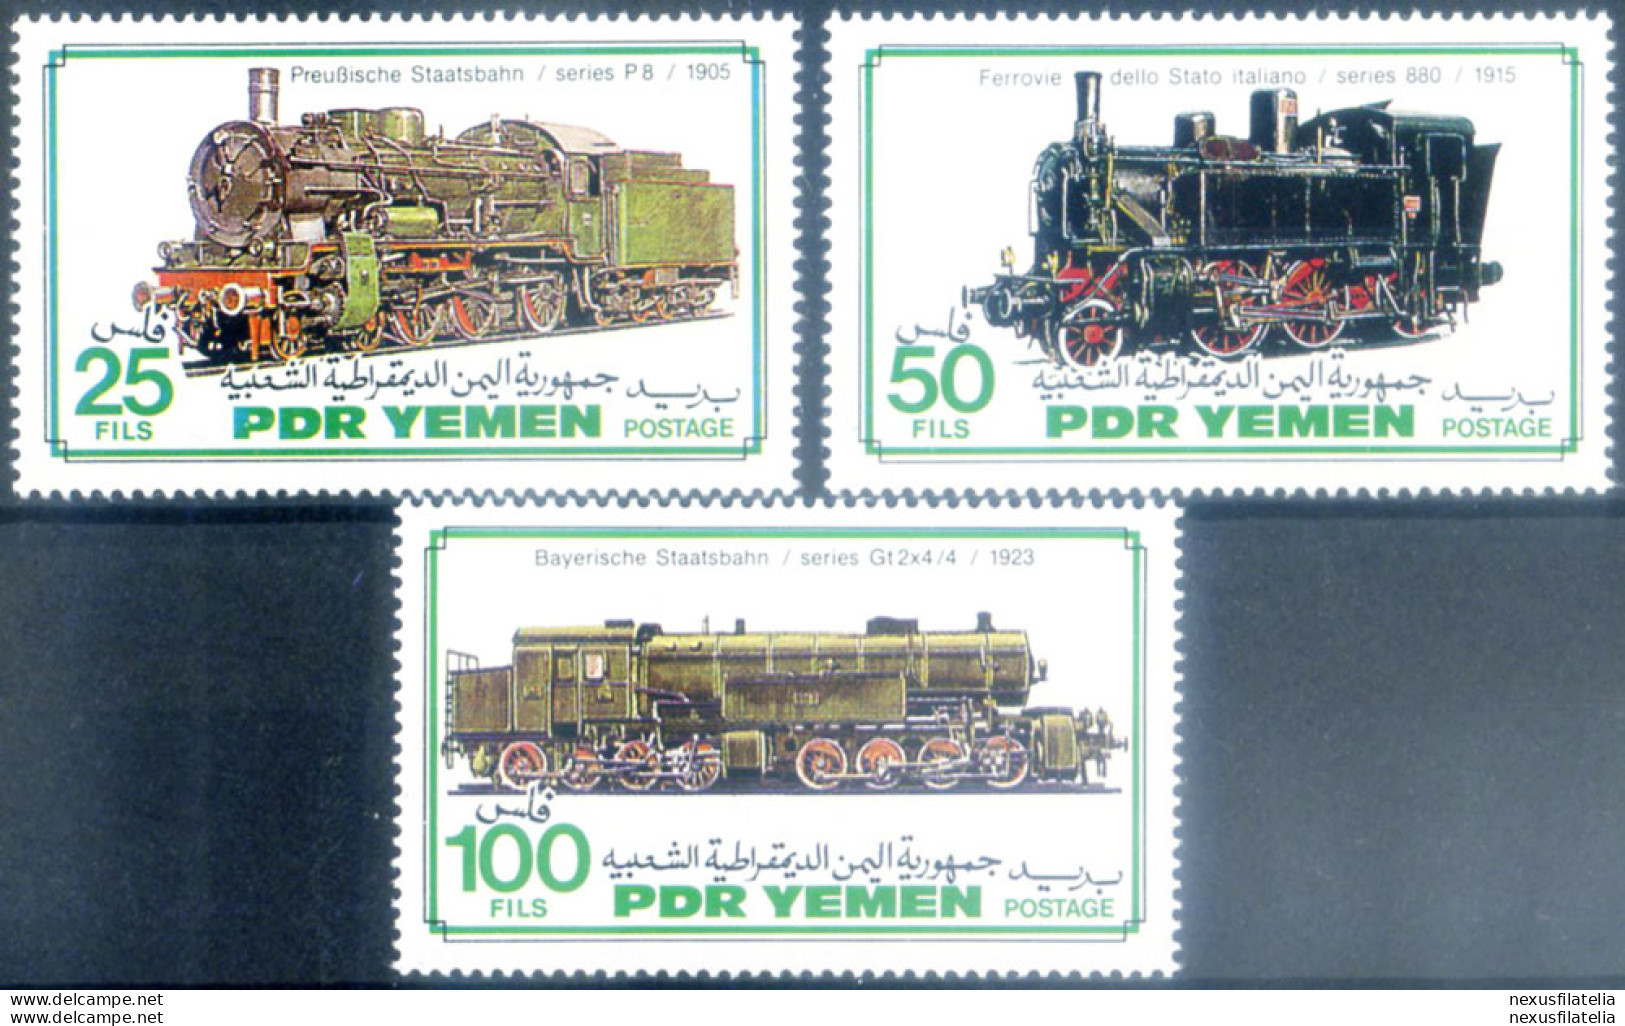 Locomotive 1983. - Yemen